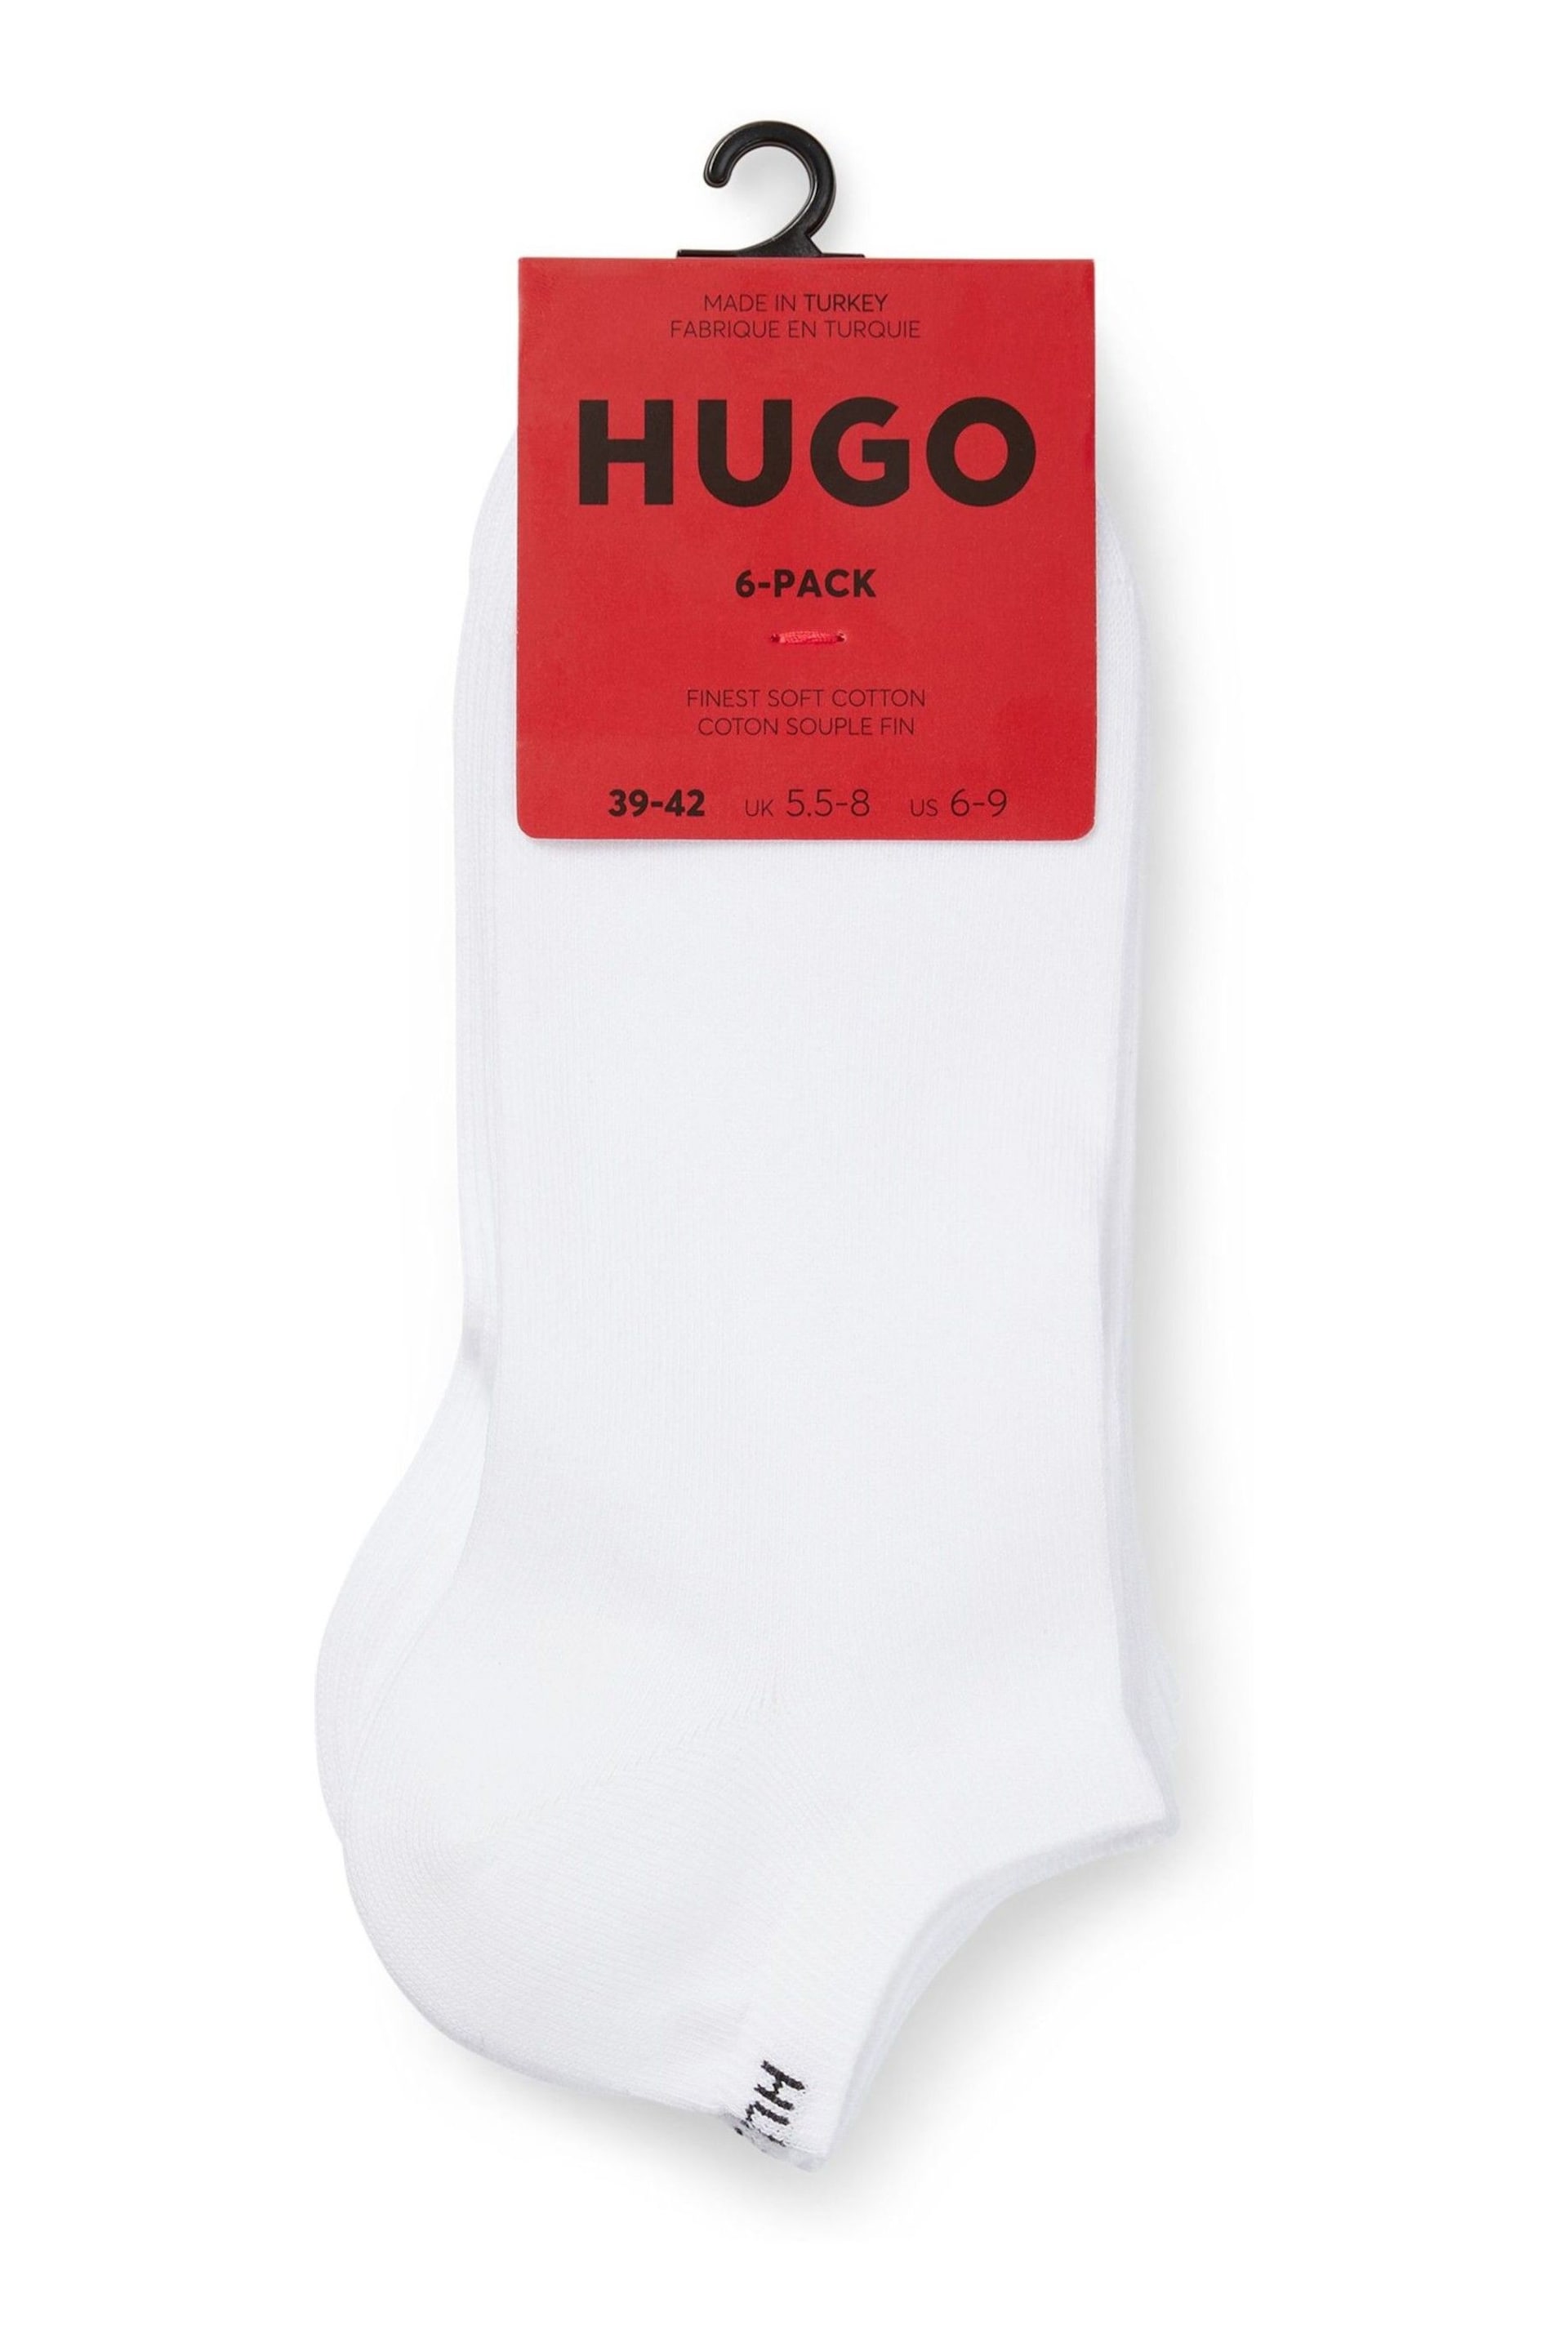 HUGO Logo Ankle Socks 6 Pack - Image 1 of 3